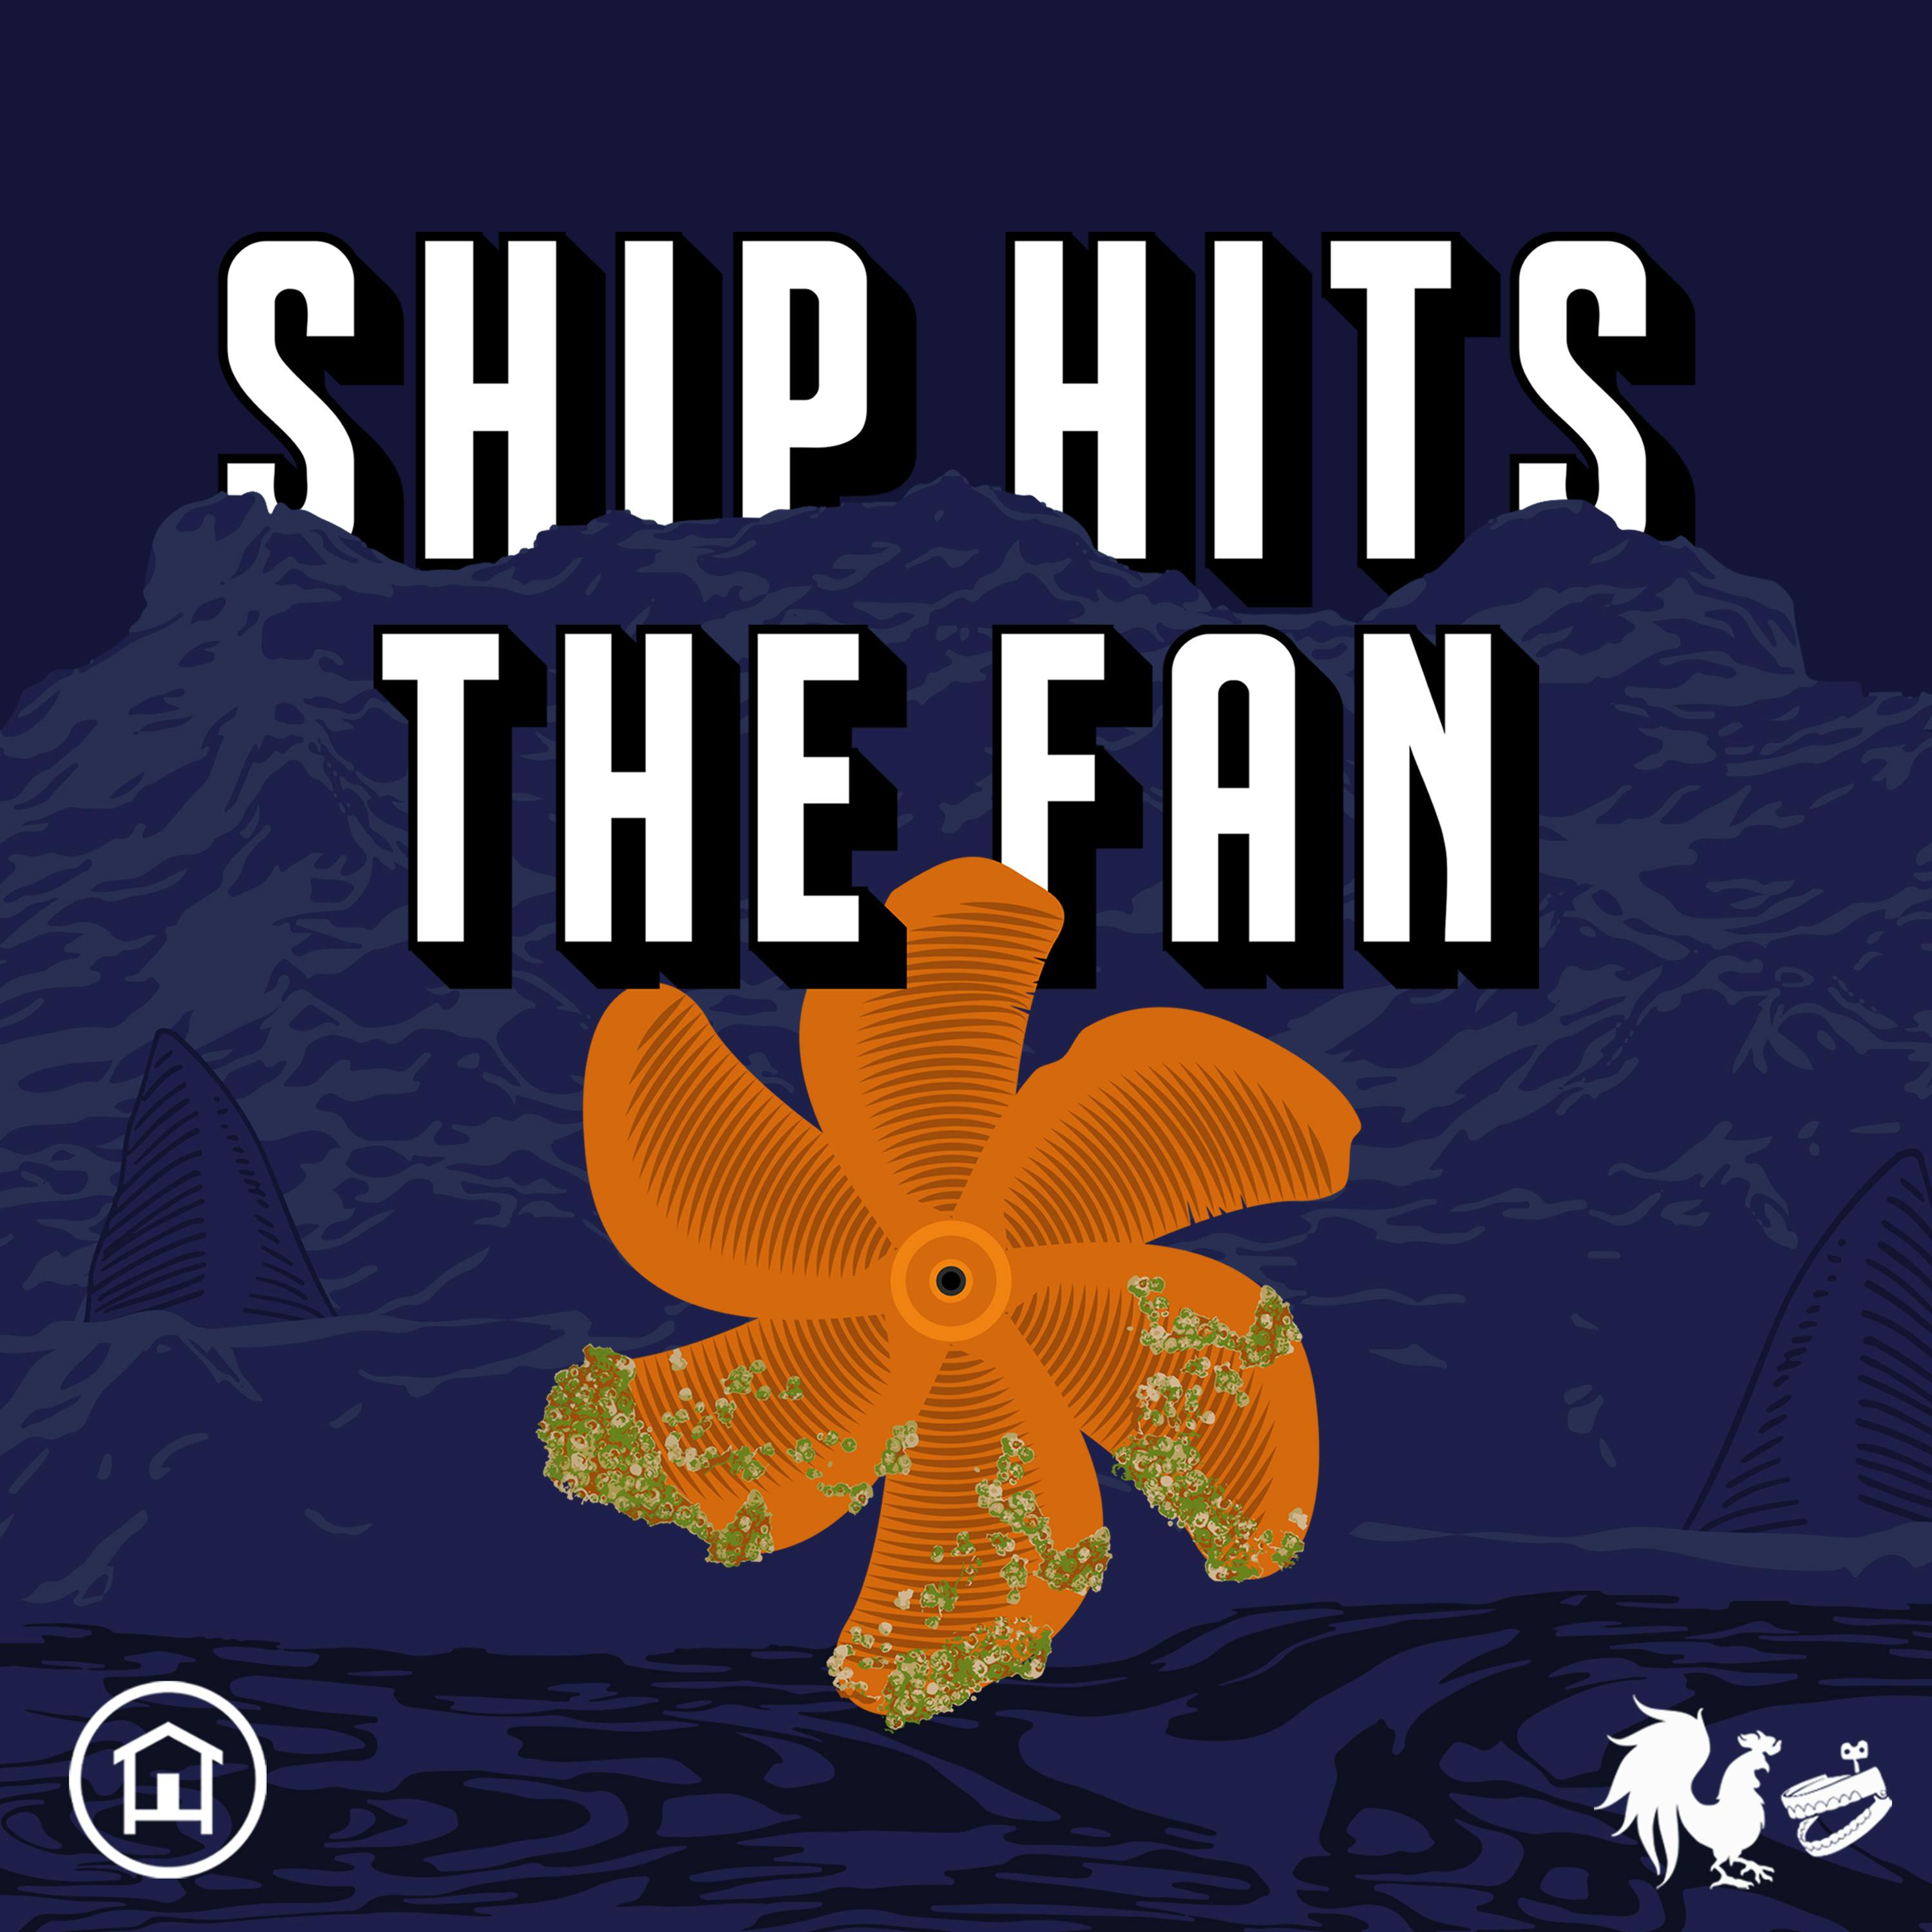 Introducing Ship Hits The Fan